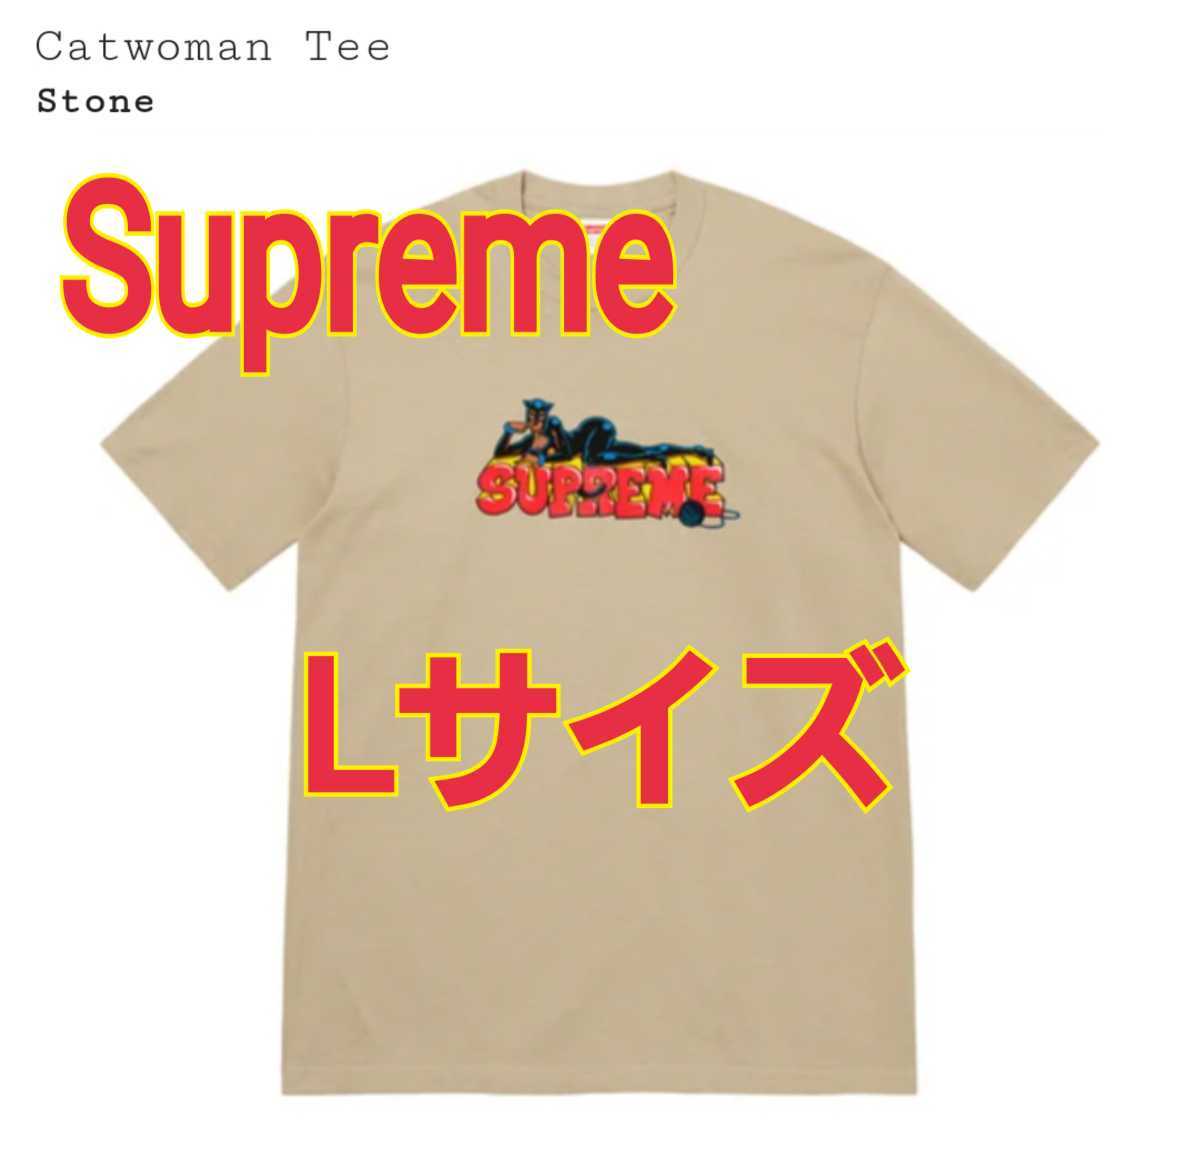 Supreme☆Catwoman Tee Black Stone ストーン Large ラージ Tシャツ 